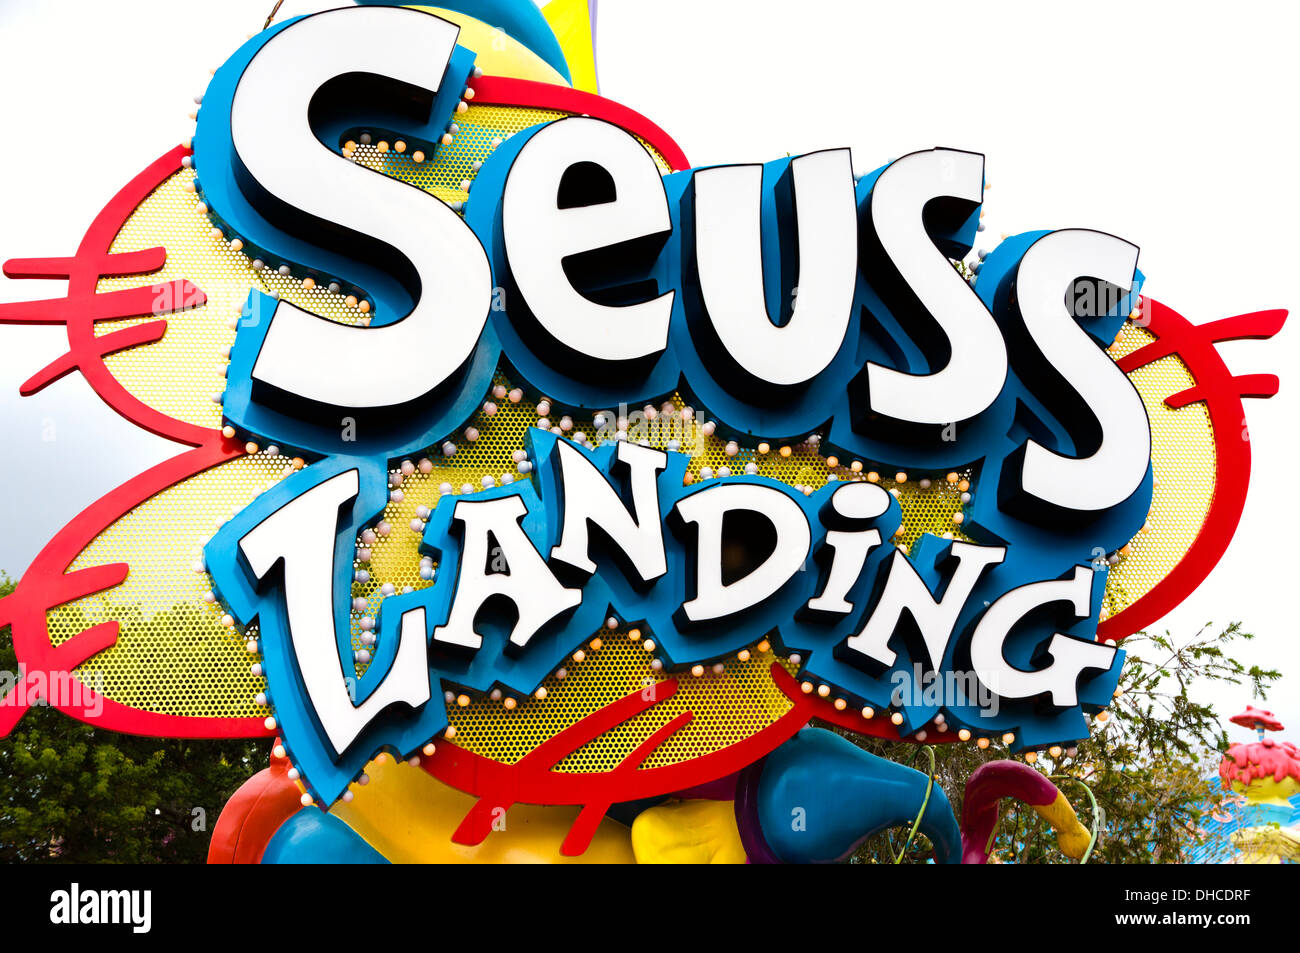 Eingang zum Seuss Landing Bereich, Islands of Adventure, Universal Orlando Resort, Orlando, Zentral-Florida, USA Stockfoto